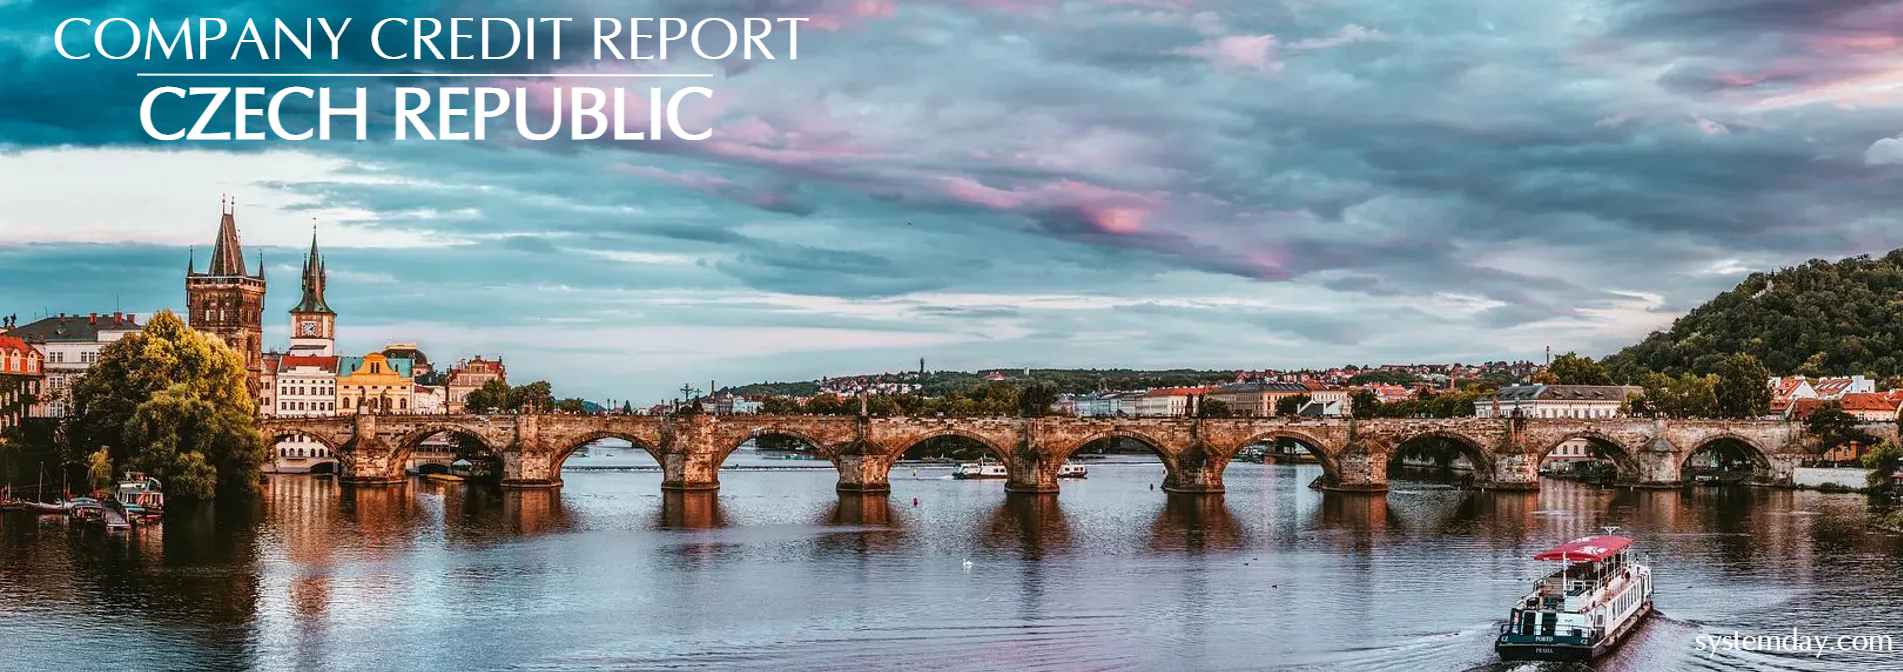 Czech Republic Company Credit Report